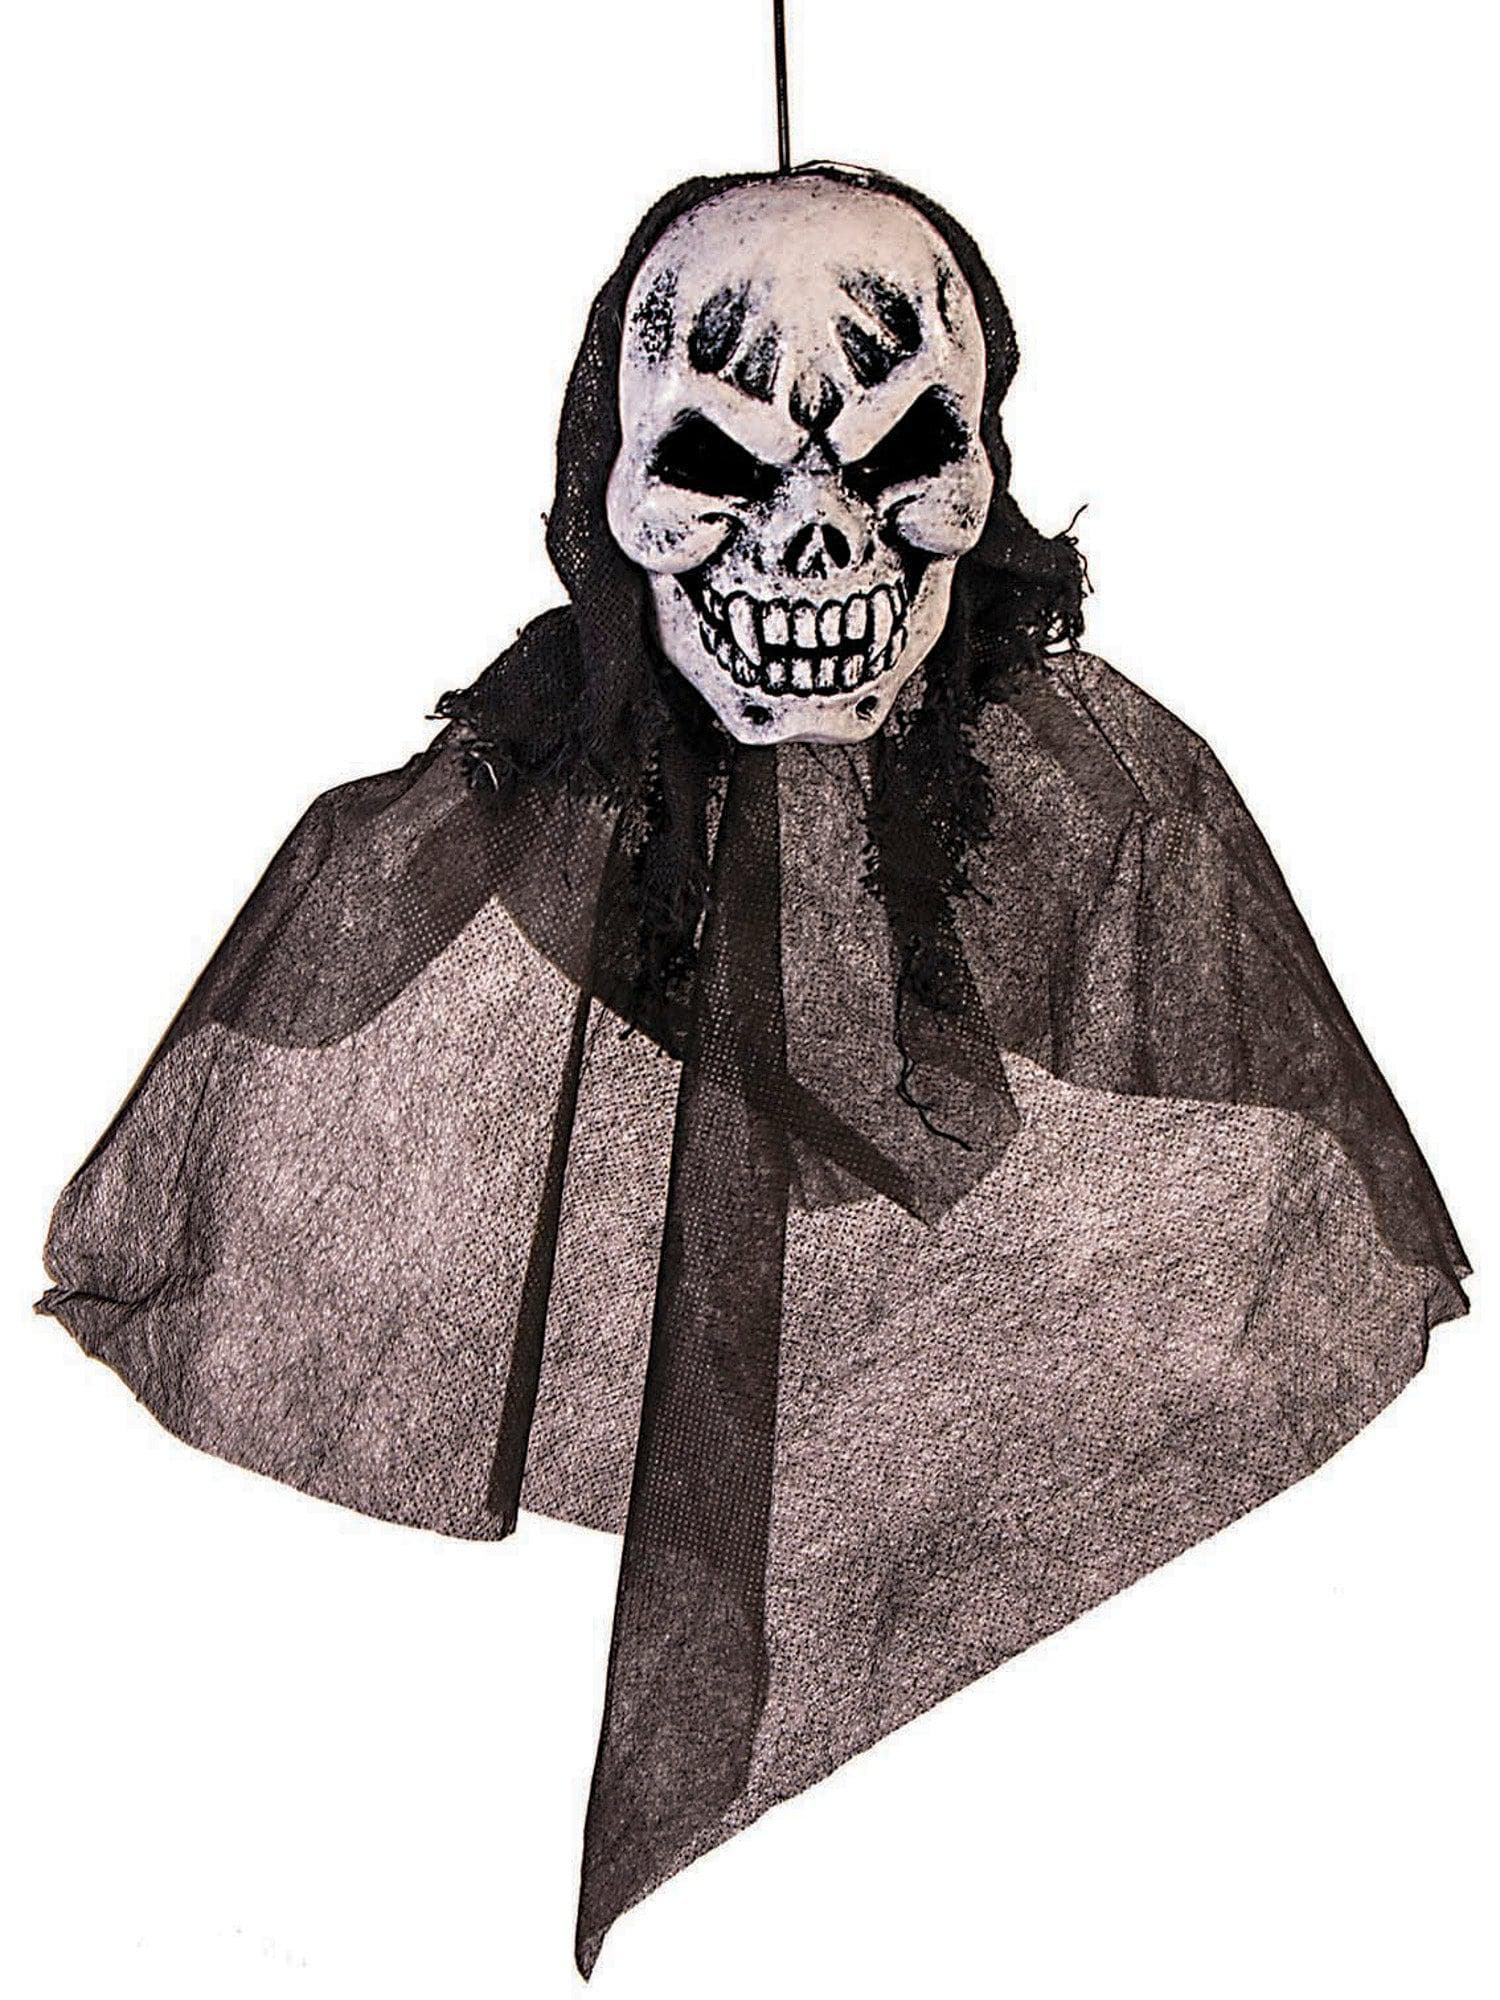 12-inch Grim Reaper Hanging Decoration - costumes.com